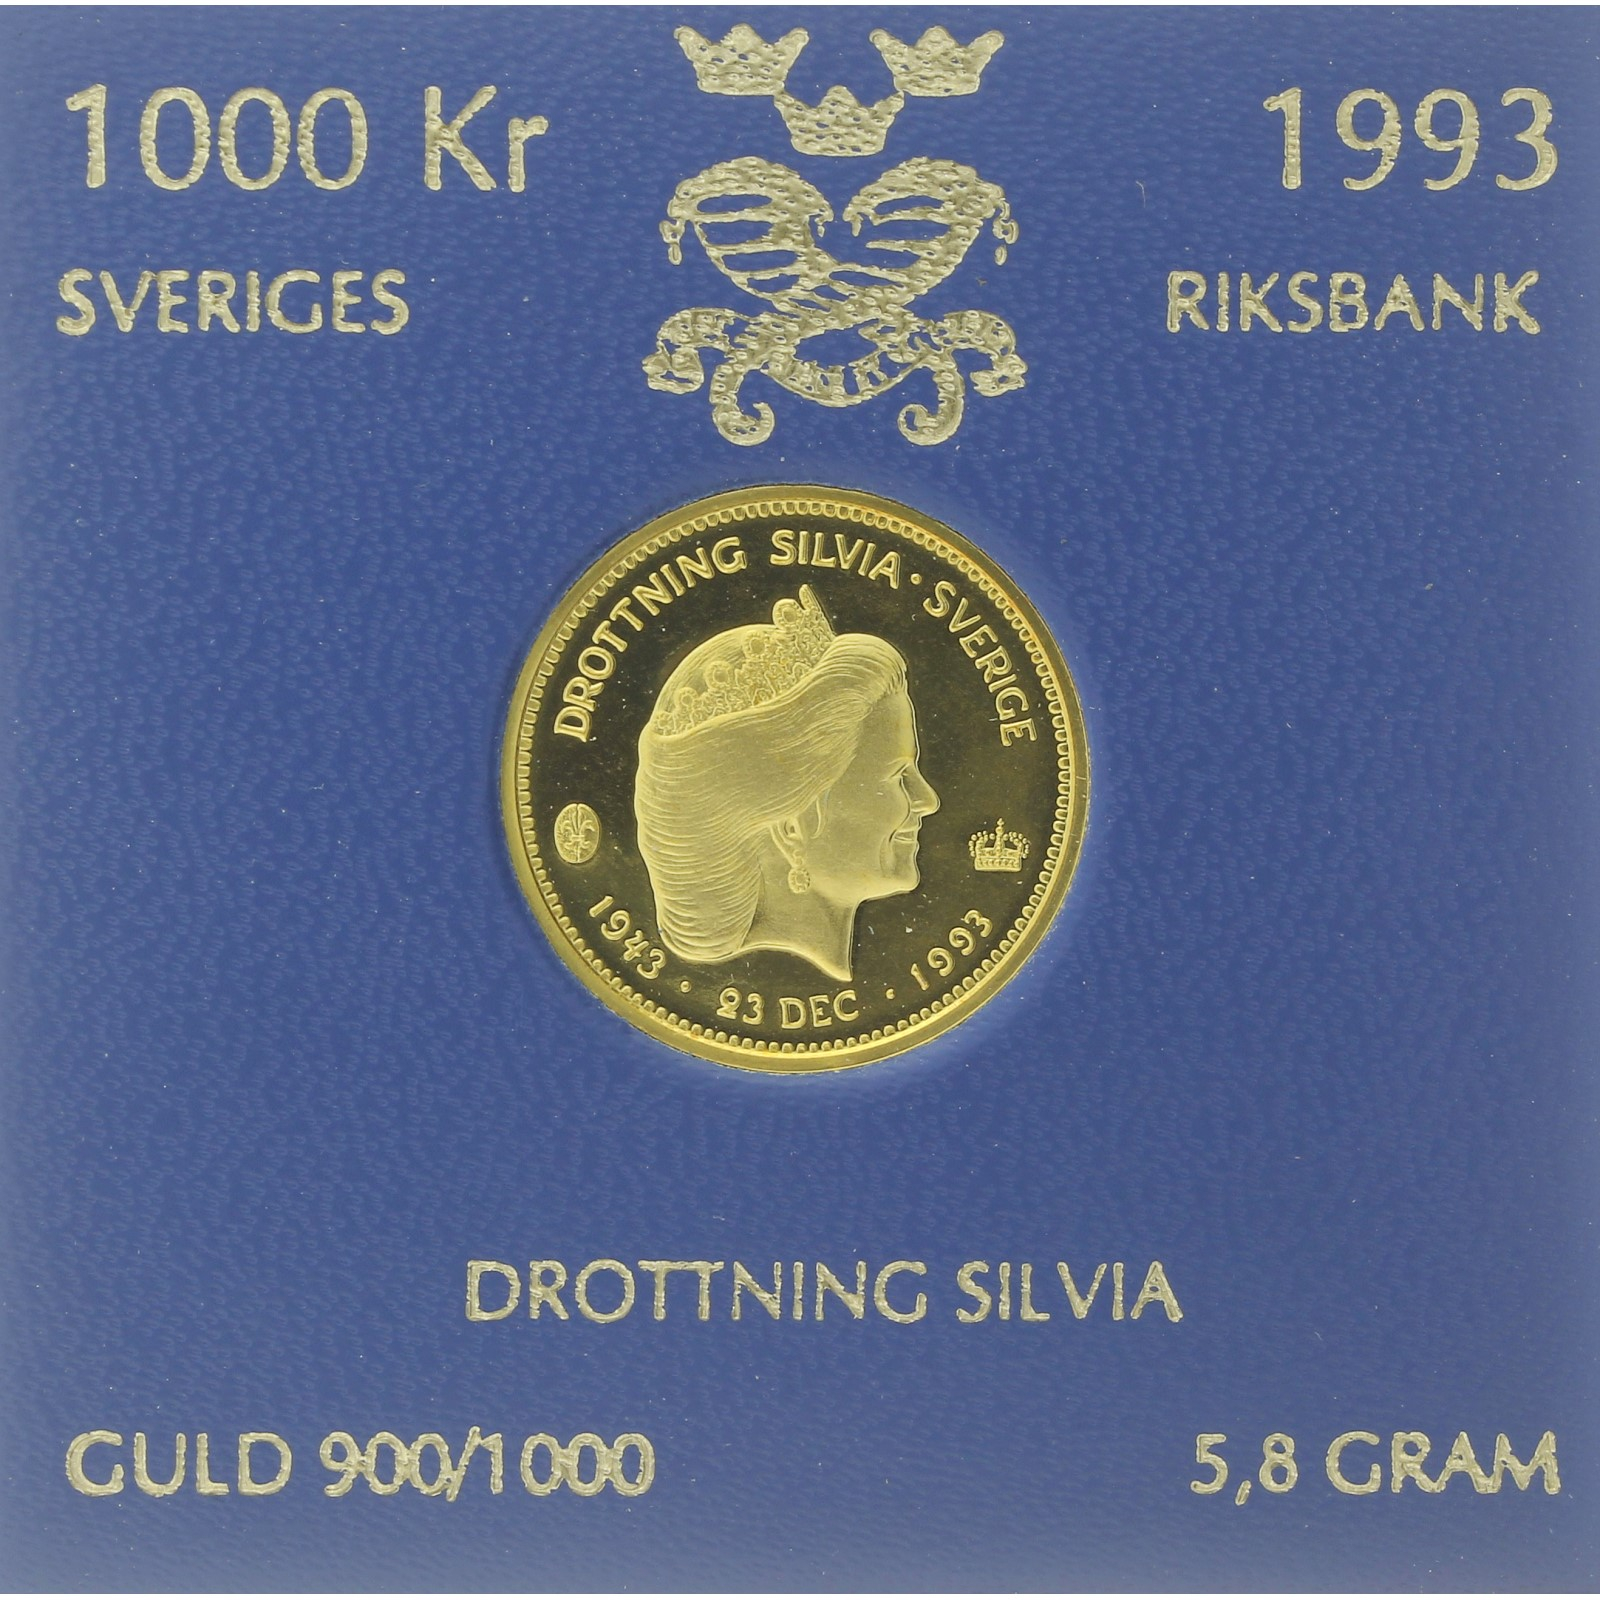 Sweden - 1000 Kronor - 1993 - Carl XVI Gustaf - Queen Silvia